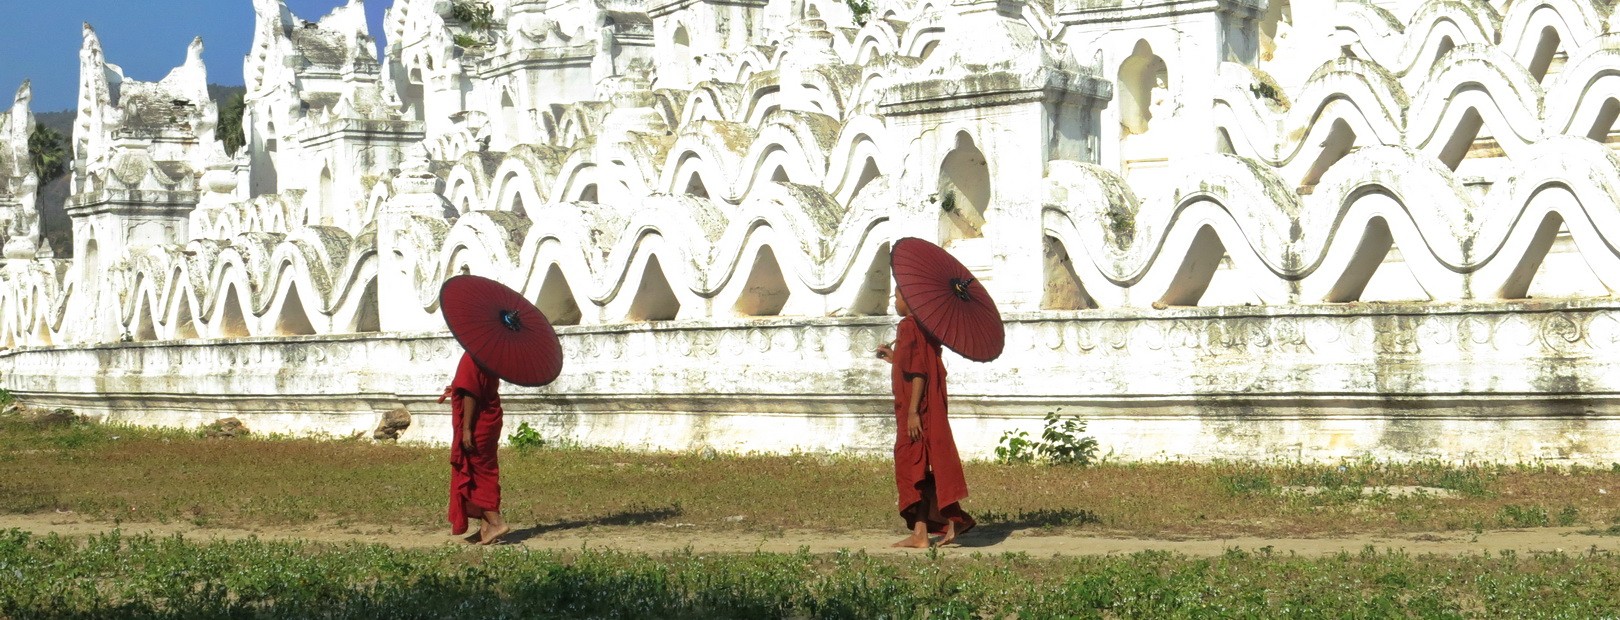 carousels/AsiaTracks_Mya Thein Tan Pagoda, Mingun, Myanmar_5f7b57df91a7a.JPG